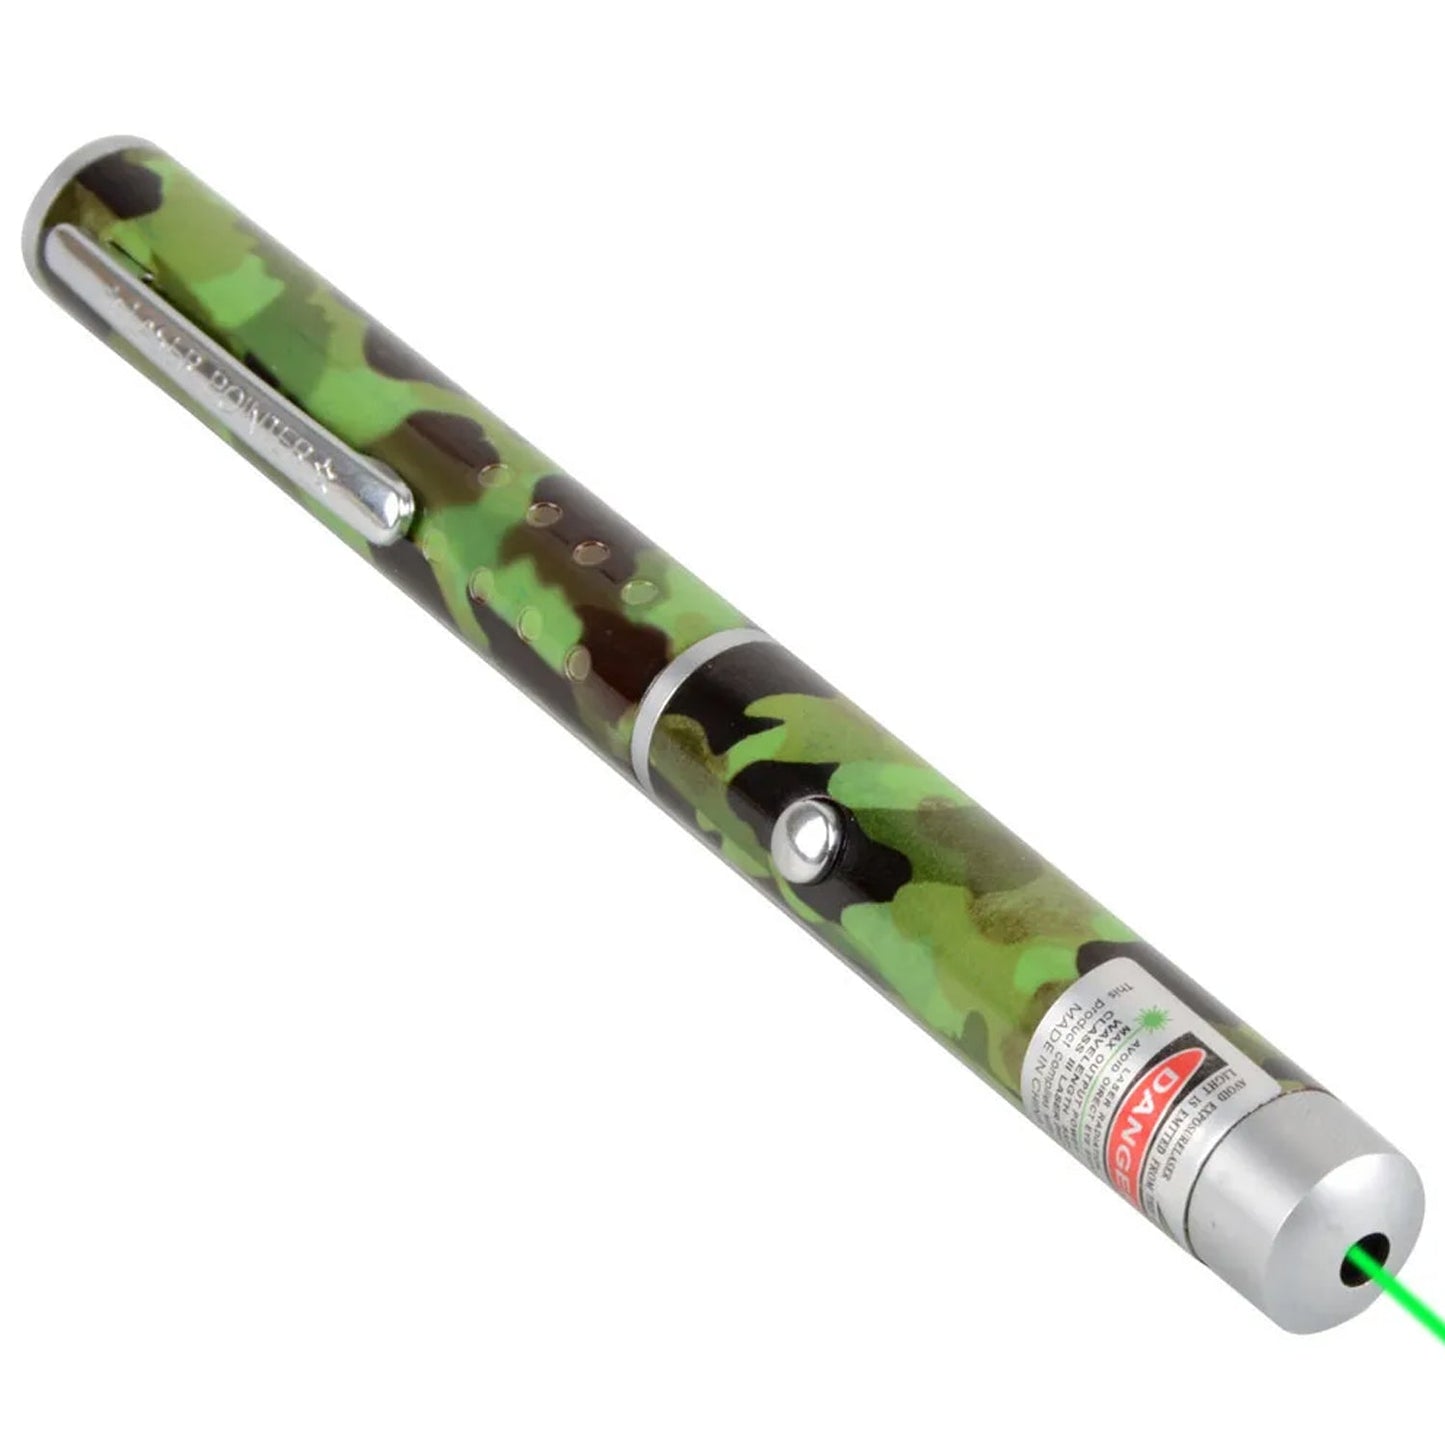 Green Multipurpose Laser Light Disco Pointer Pen Beam With Adjustable Antena Cap To Change Project Design